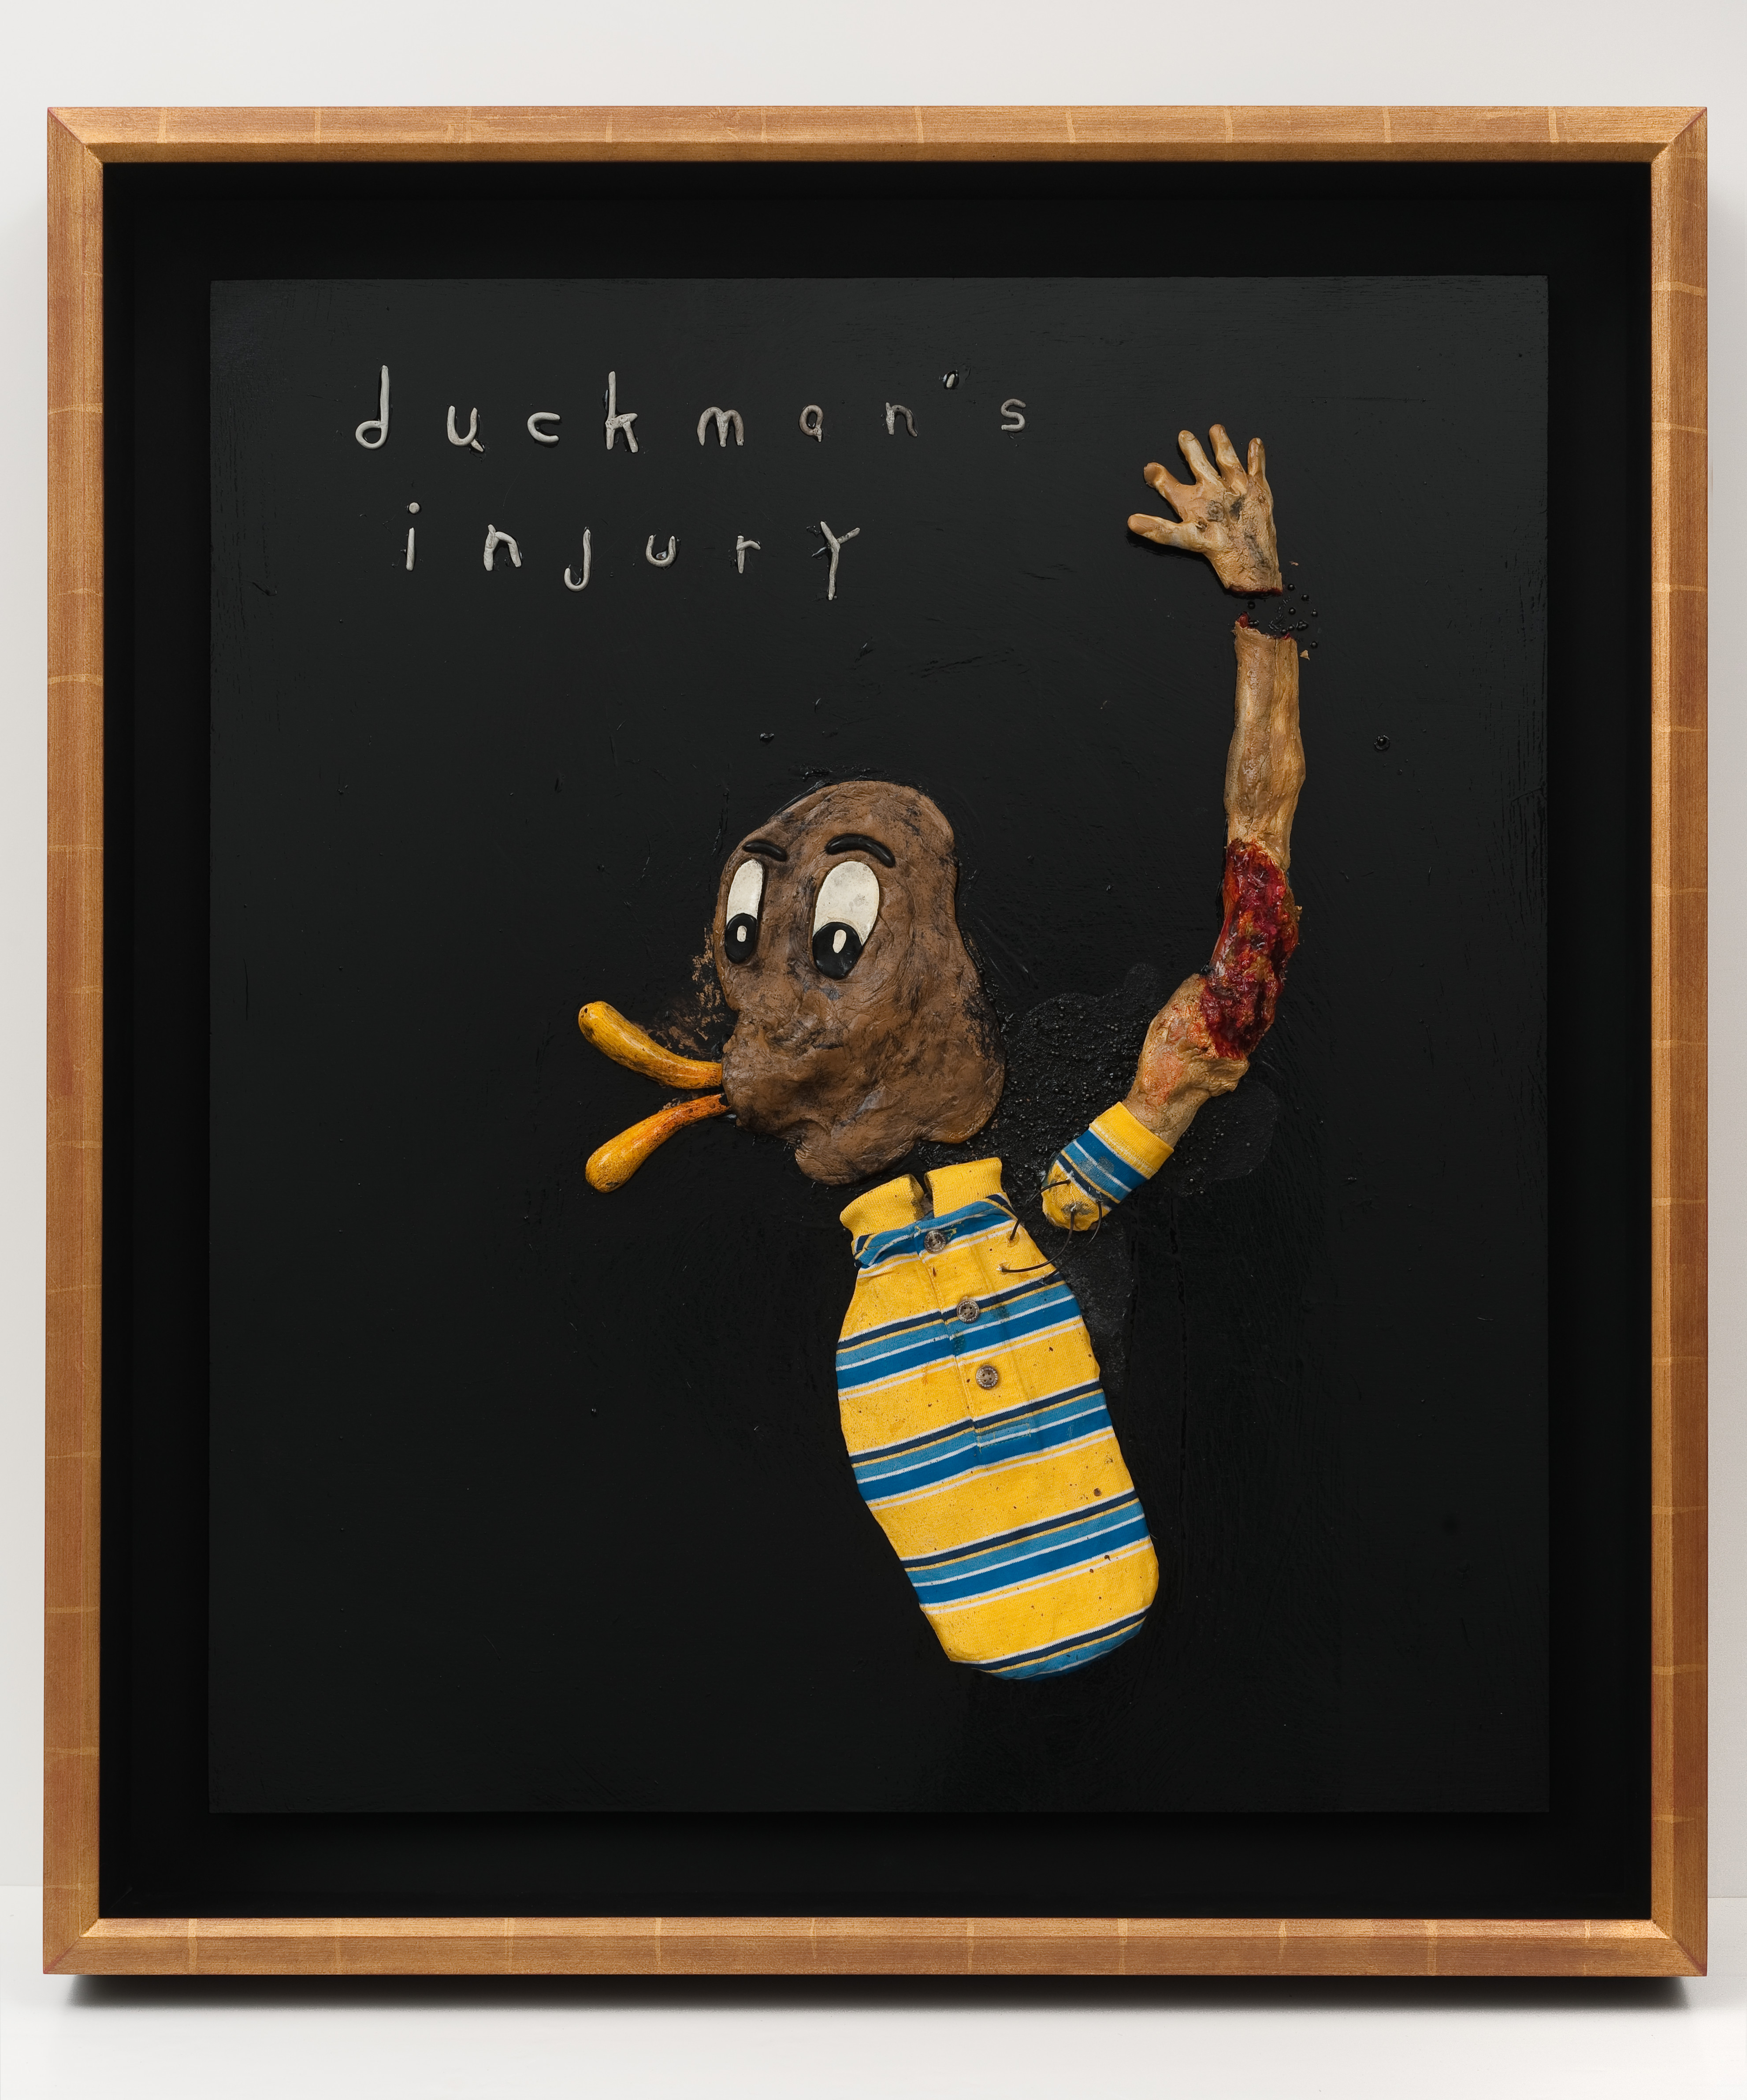 Duckman’s Injury, 2012, Copyright David Lynch